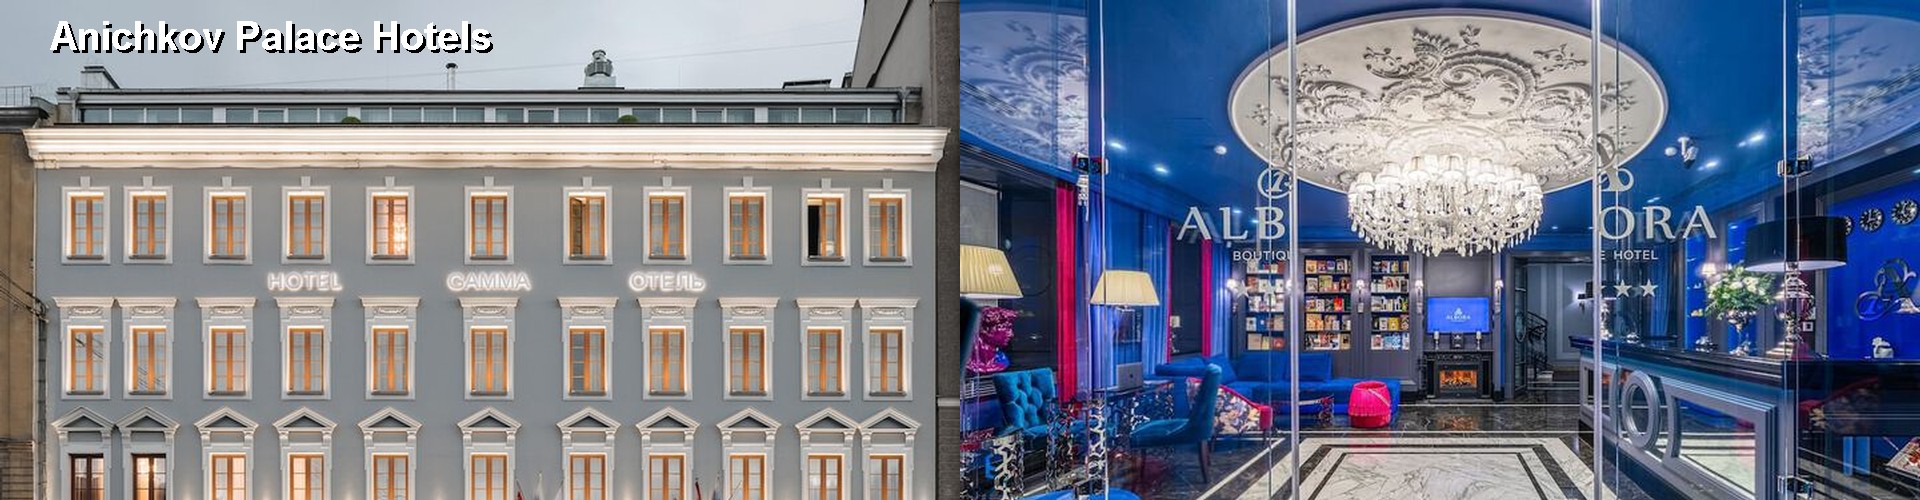 5 Best Hotels near Anichkov Palace